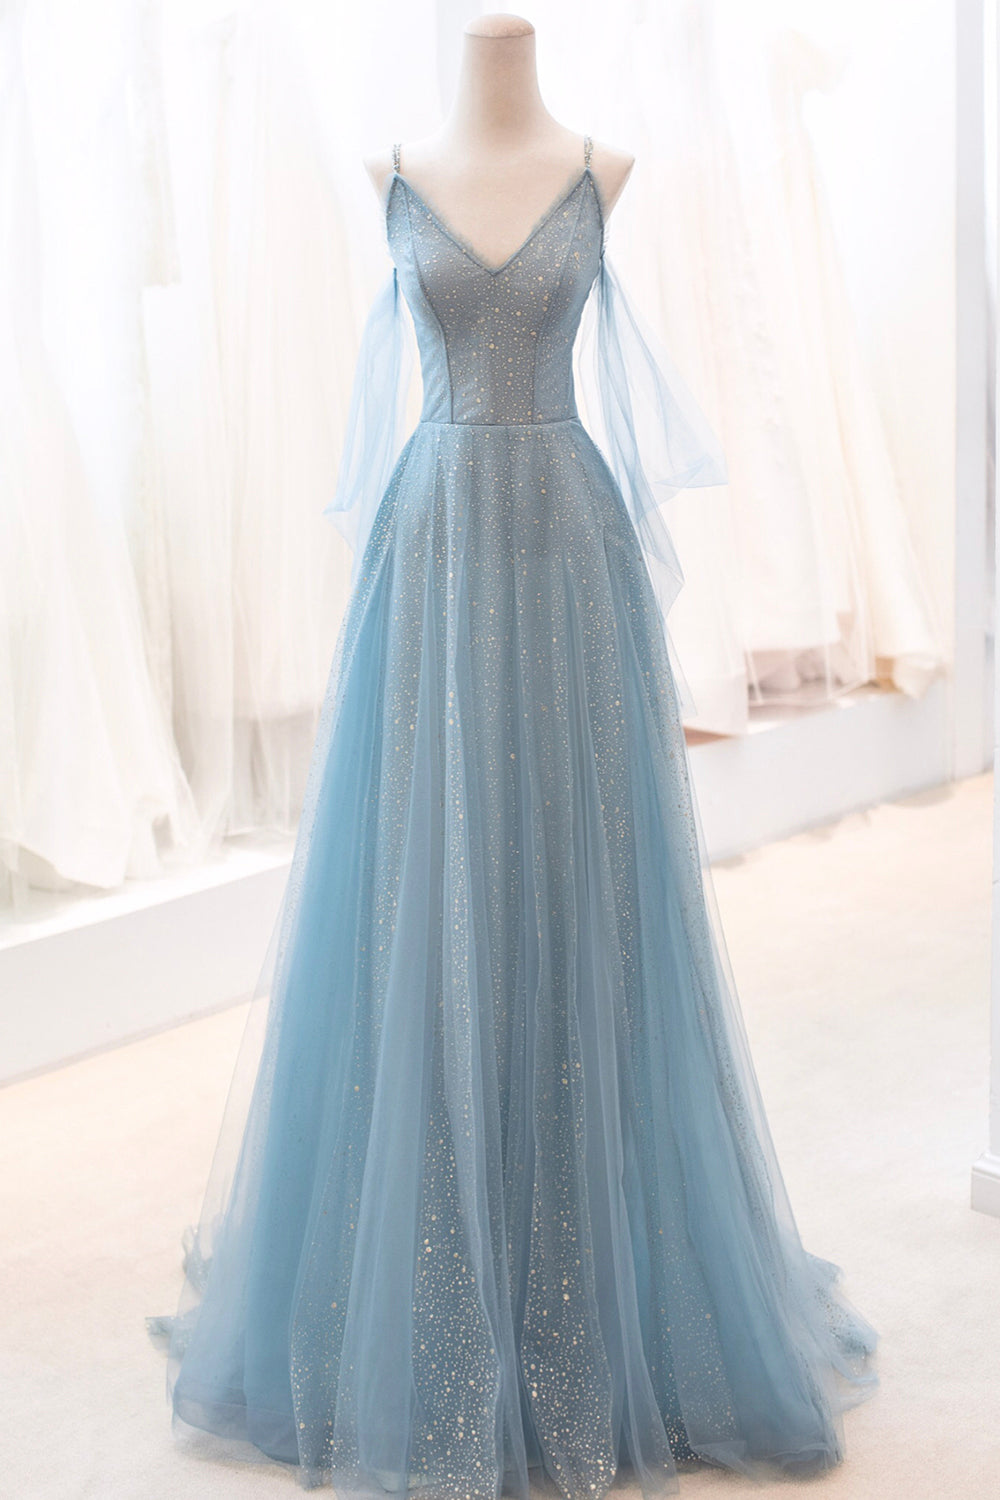 Blue V-Neck Tulle Long Prom Dress, A-Line Spaghetti Strap Evening Dress